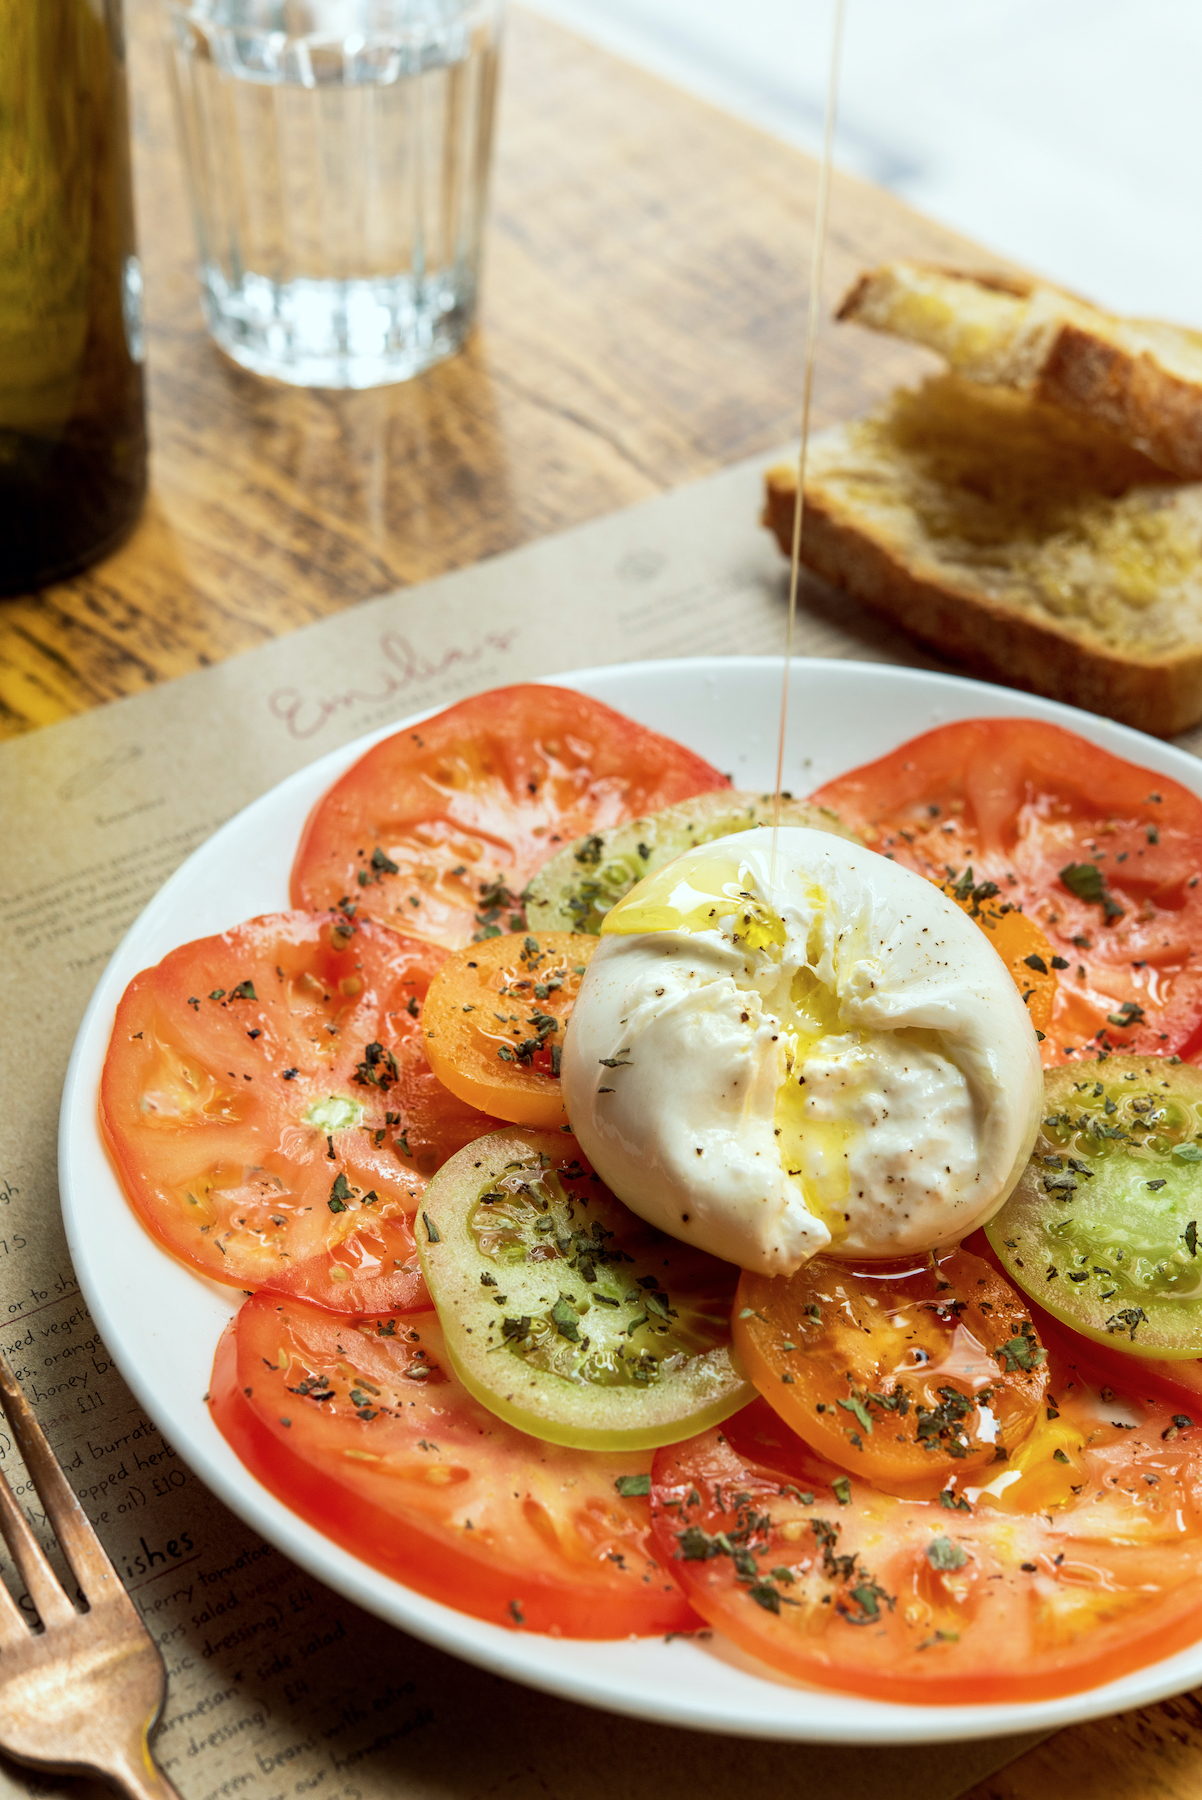 burrata-salad-heritage-heirloom-tomatoes-extra-virgin-organicolive-oil-drizzle-emilias-crafted-pasta-london-restaurant-st-katharine-docks-aldgate